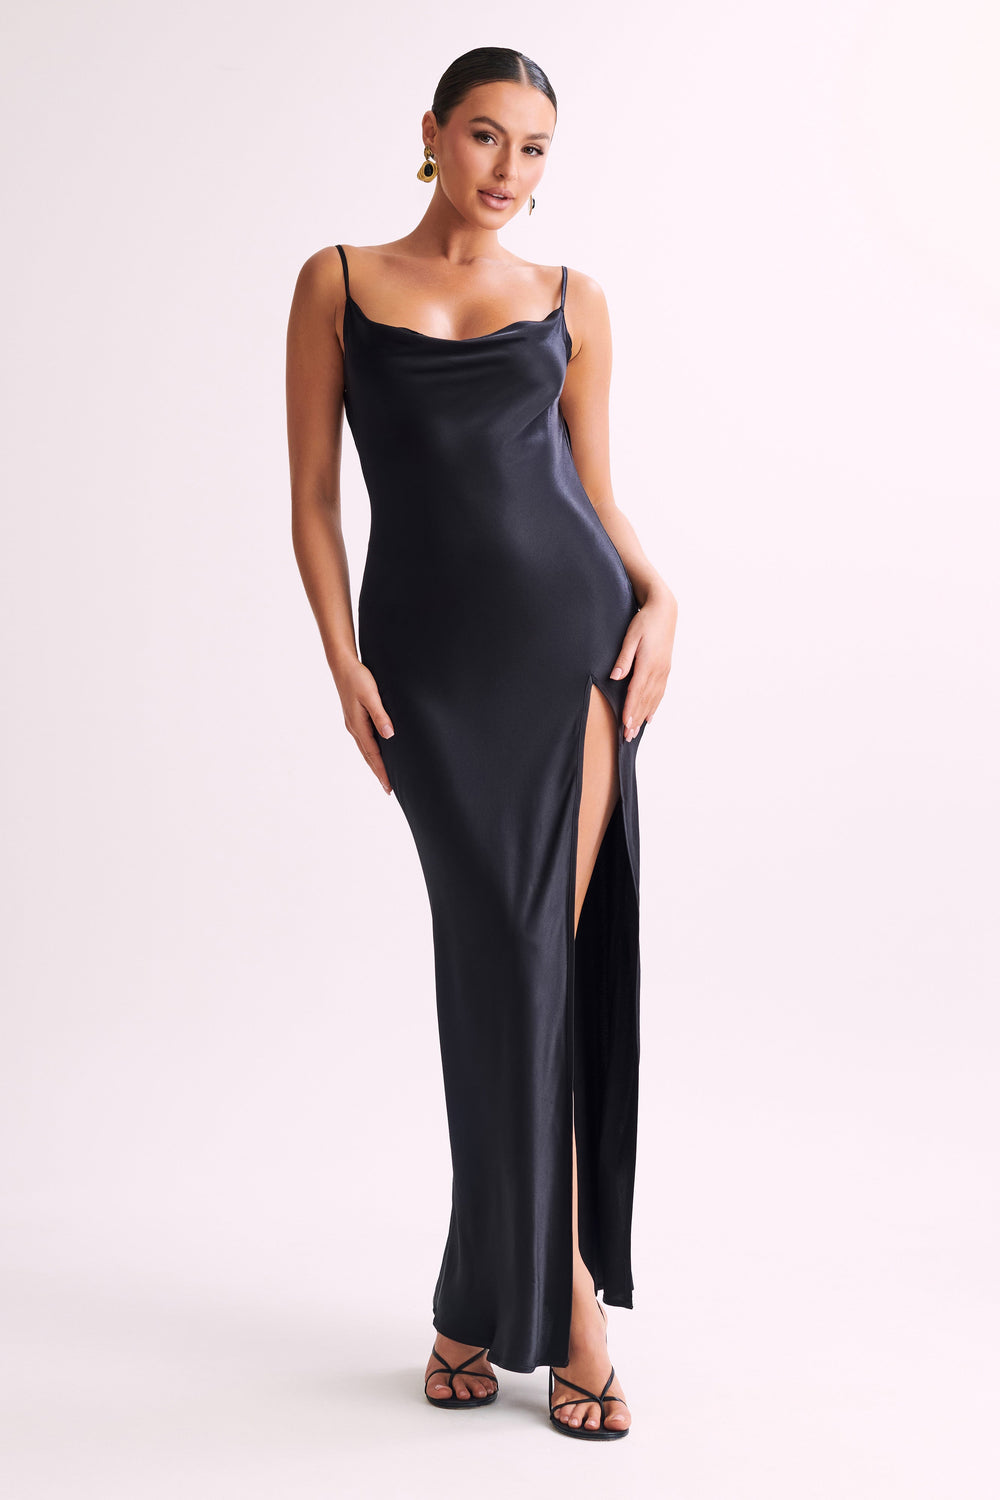 Jade Cowl Neck Backless Maxi Dress - Black